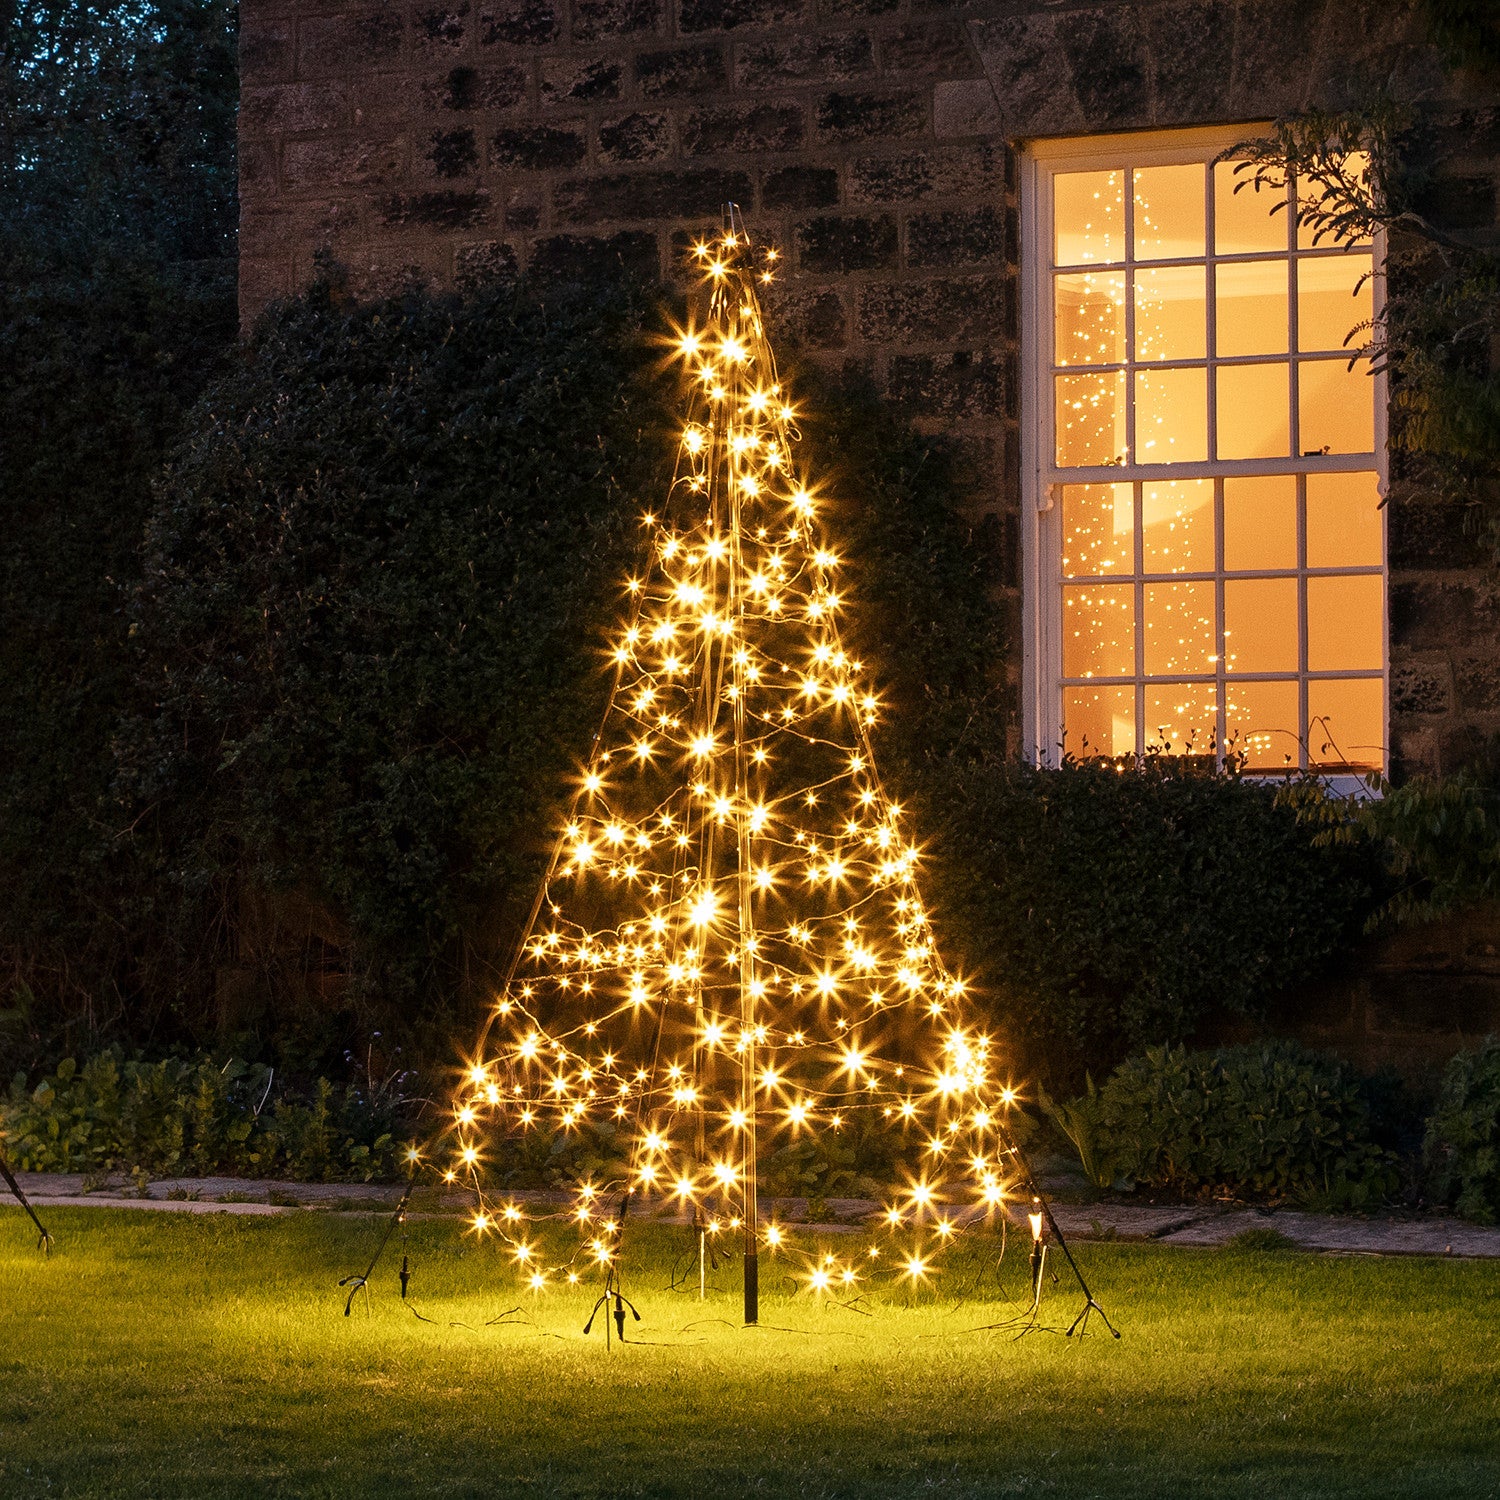 Christmas Lights On A Tree Photos